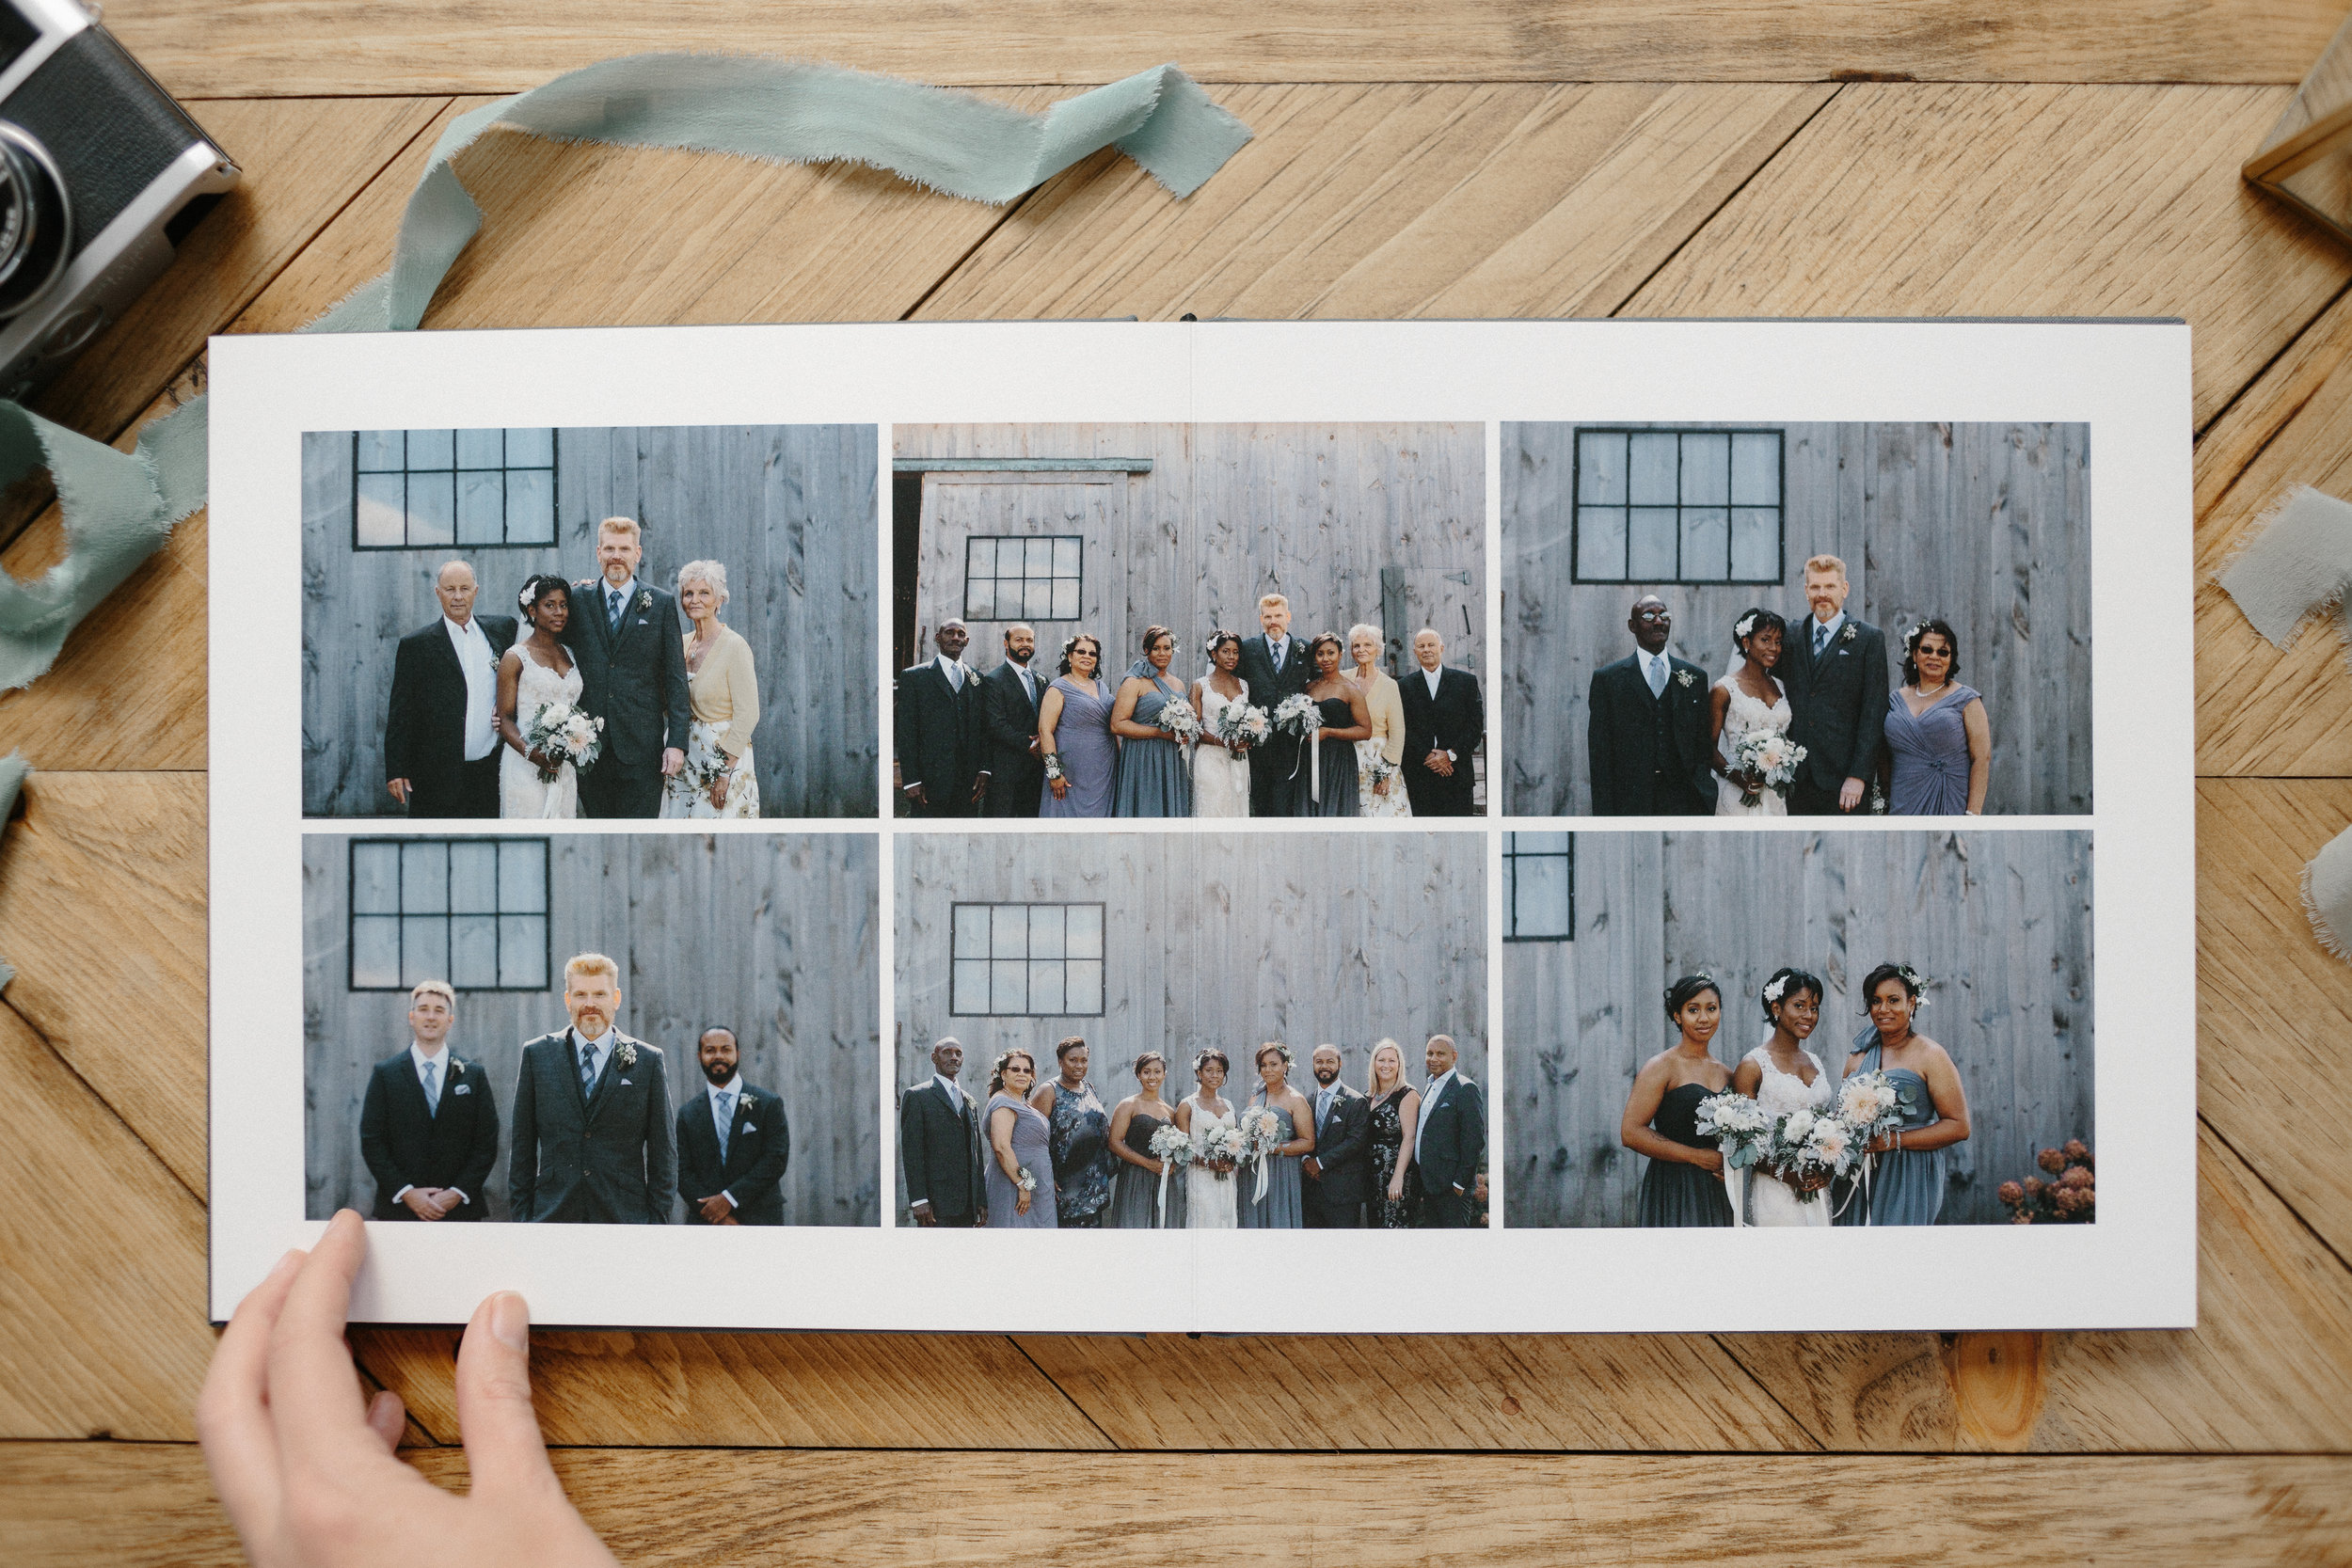 ryanne-hollies-photography-wedding-album-design-details-tono-and-co-artifact-uprising-80.jpg